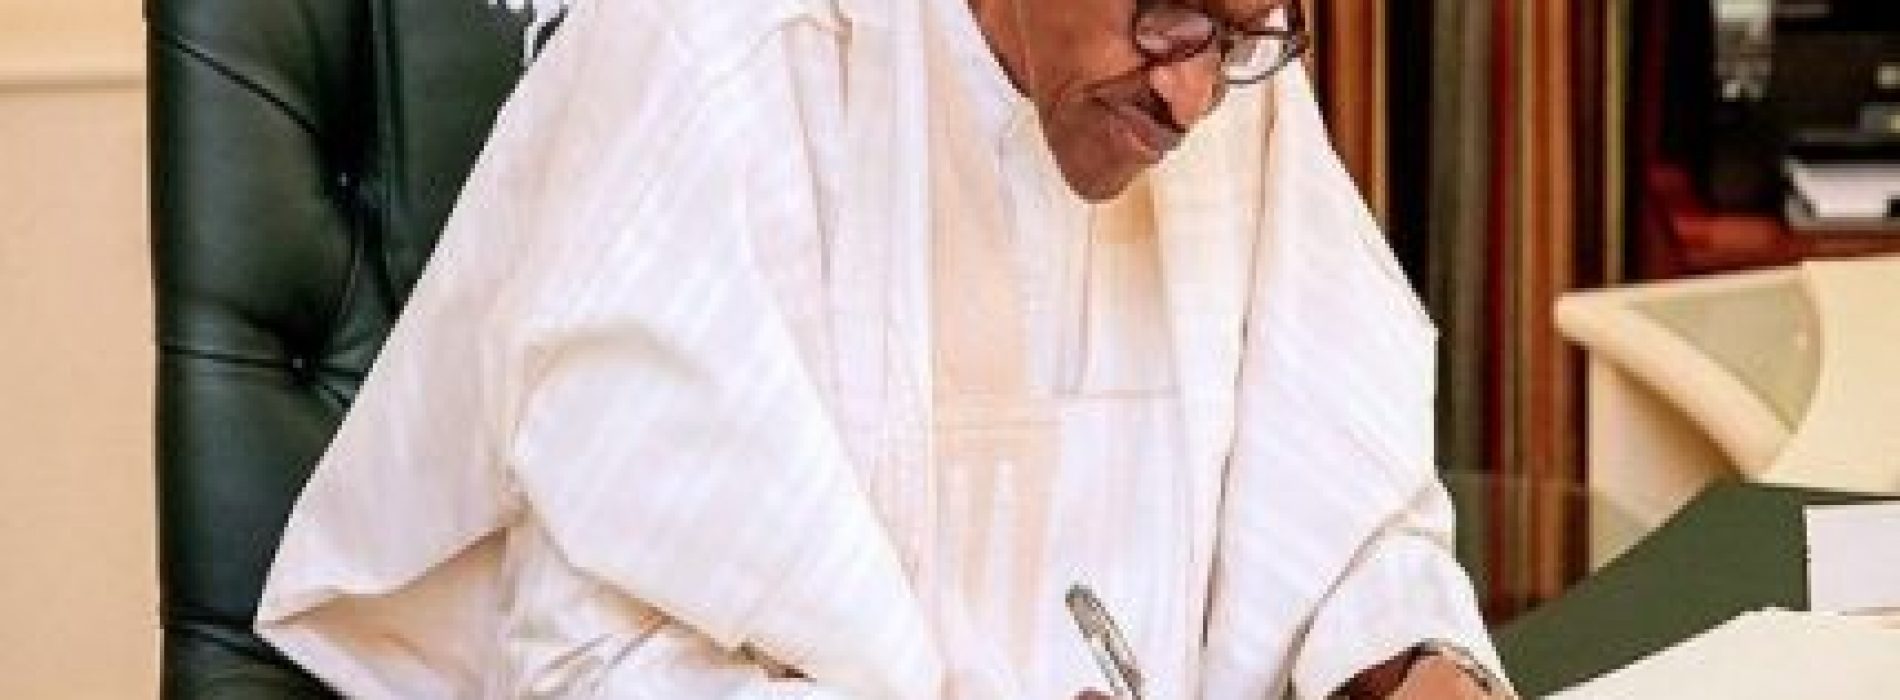 Buhari signs medical residency training bill into law